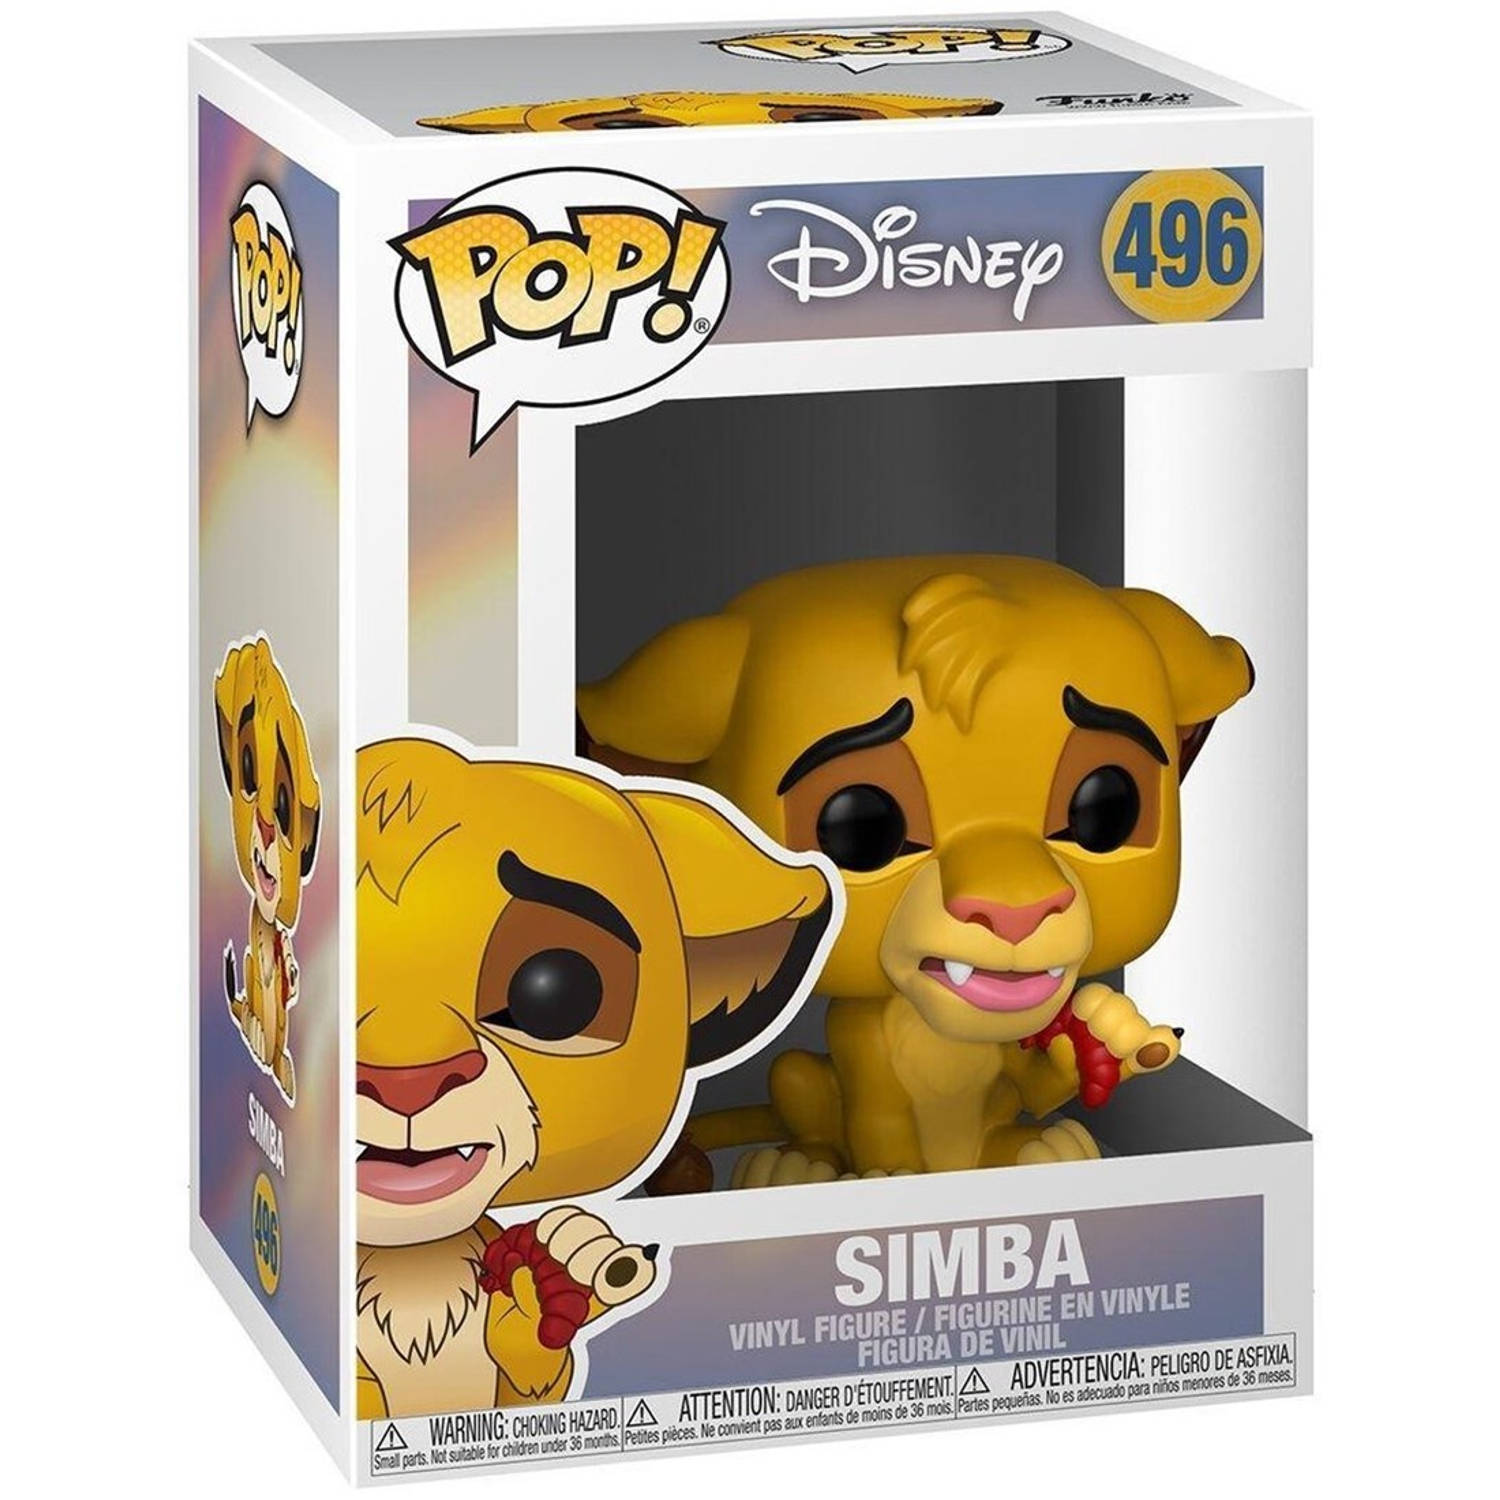 Disney The Lion King Pop Vinyl: Simba (496)